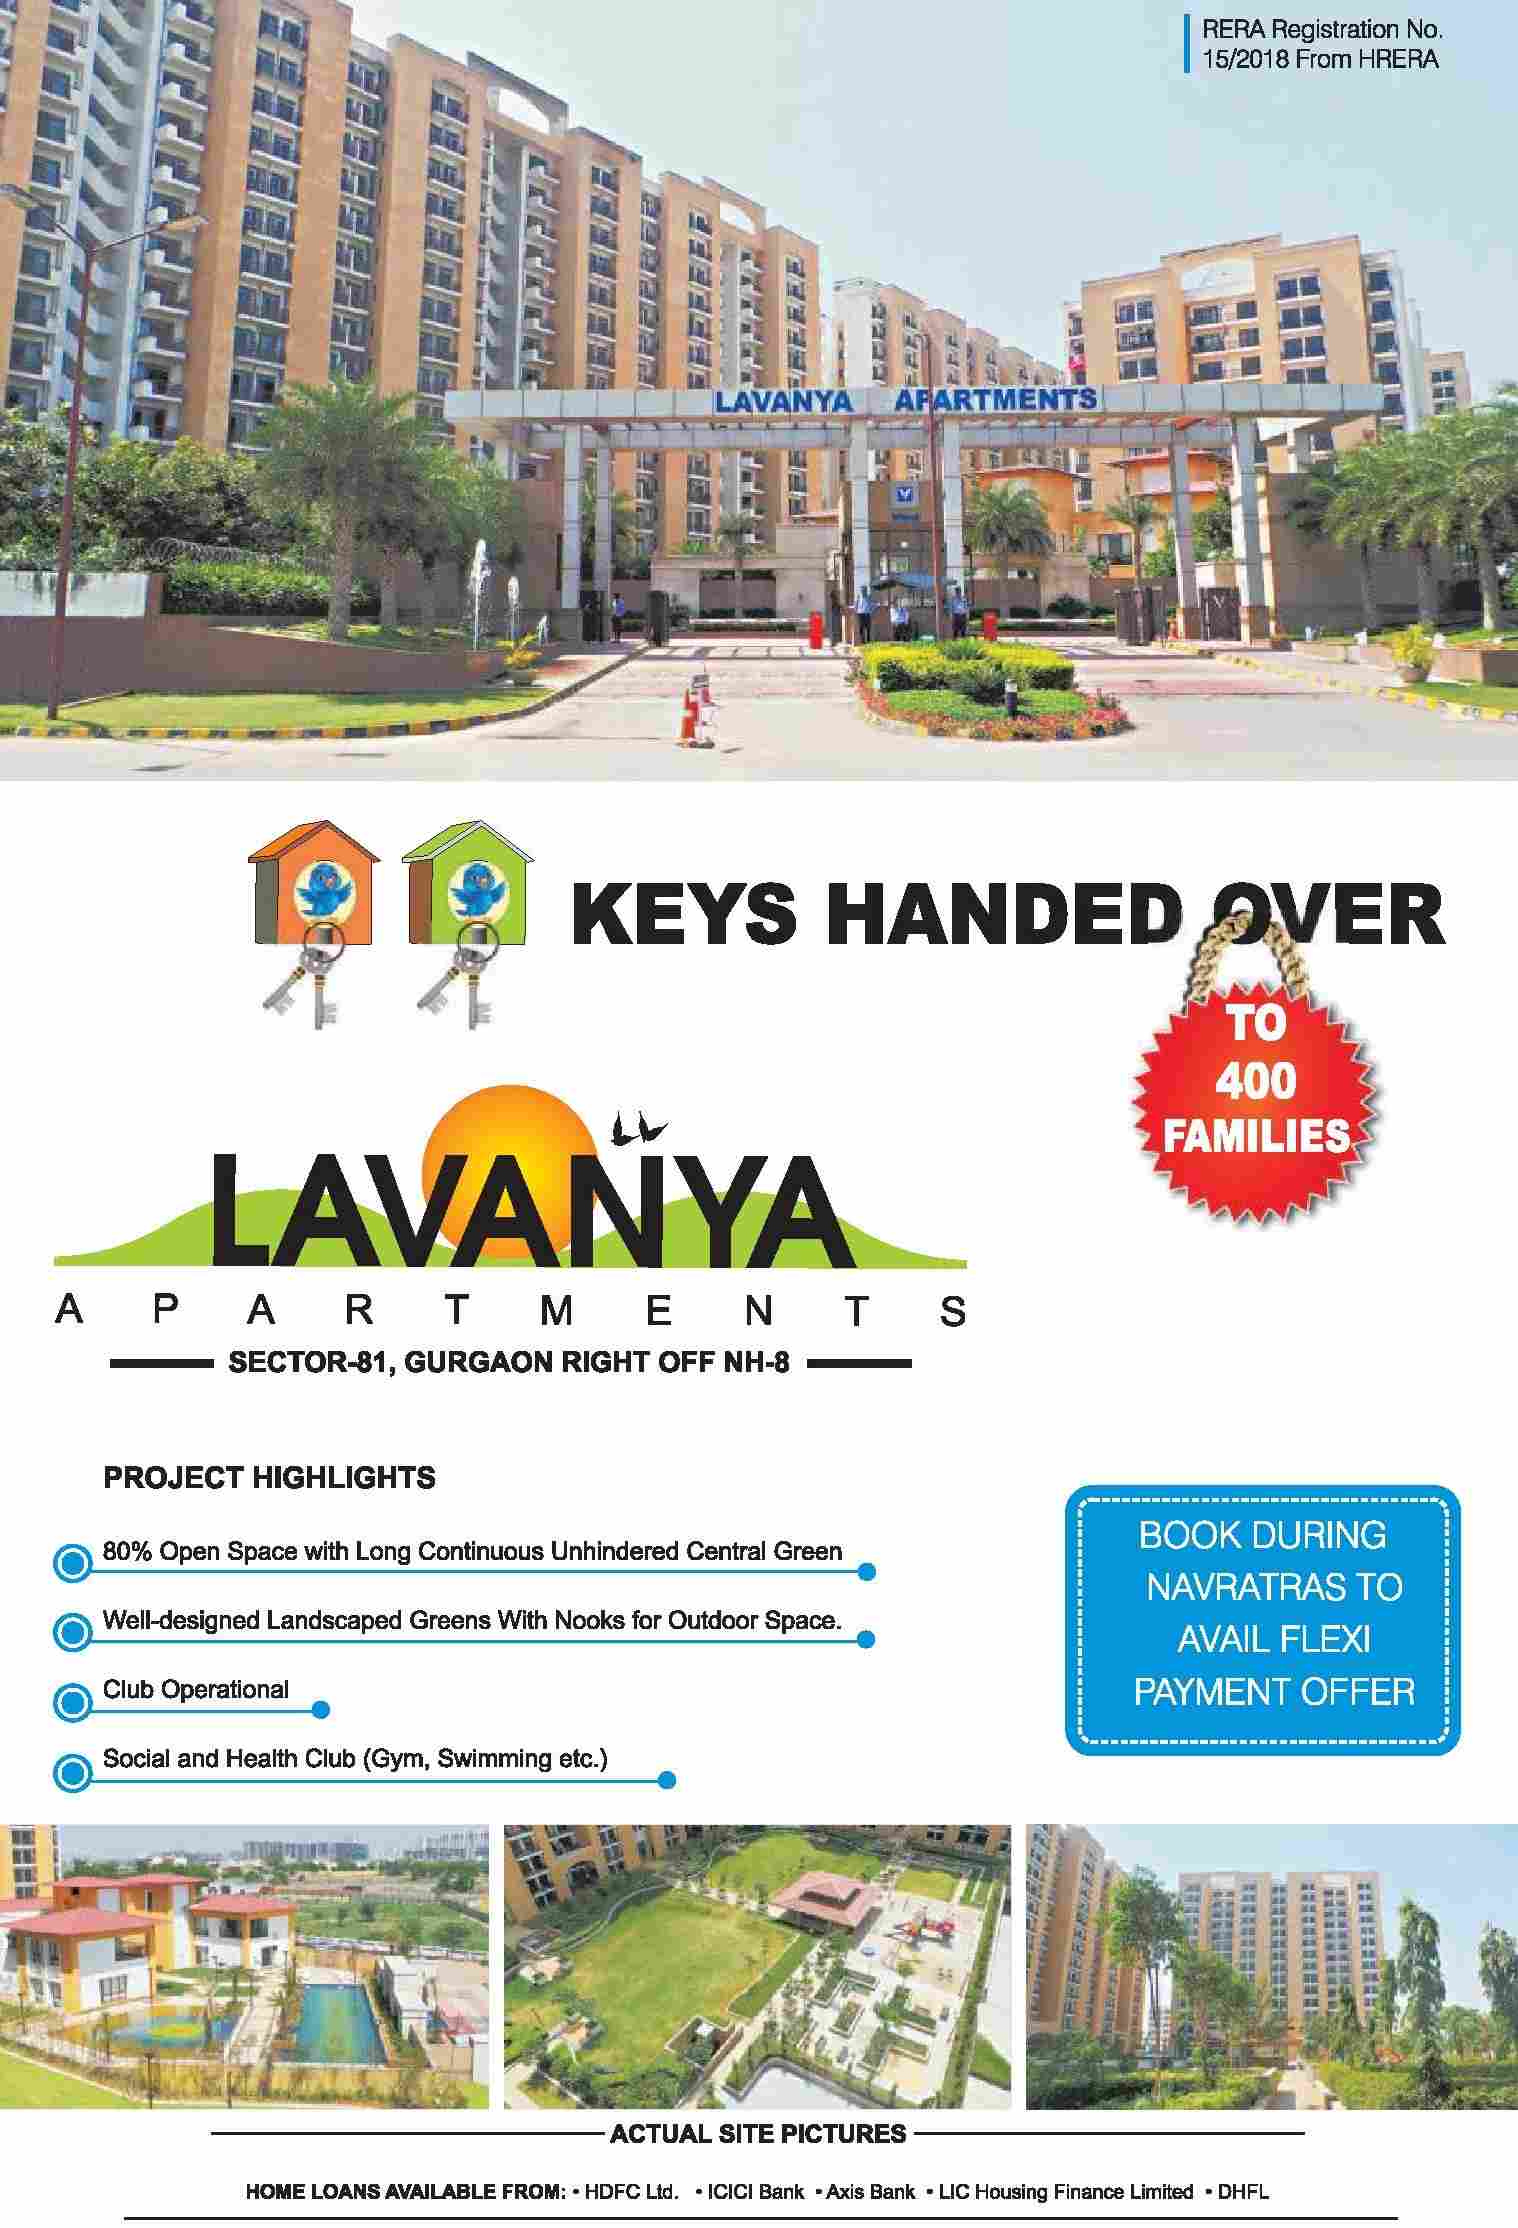 Keys handed over to 400 families at Vipul Lavanya Apartments in Gurgaon